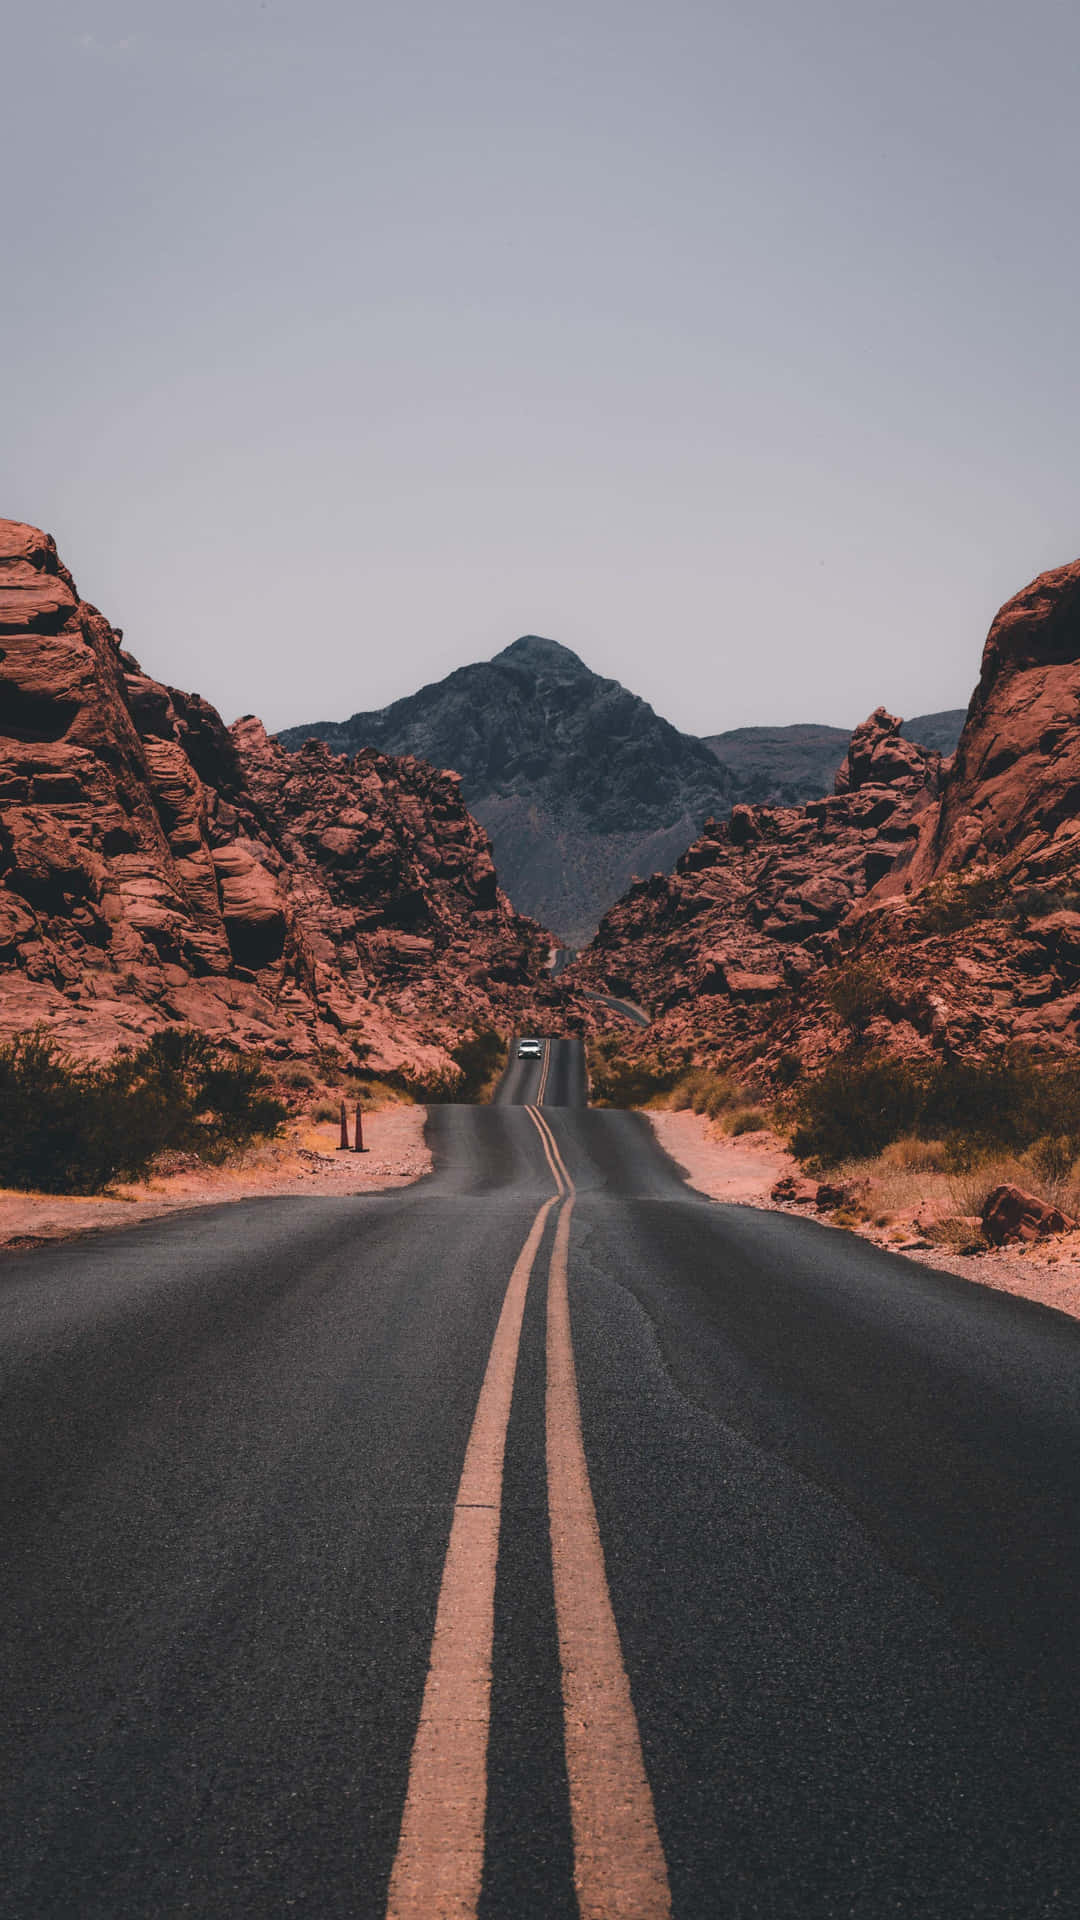 Desert_ Road_ Mountain_ View.jpg Background